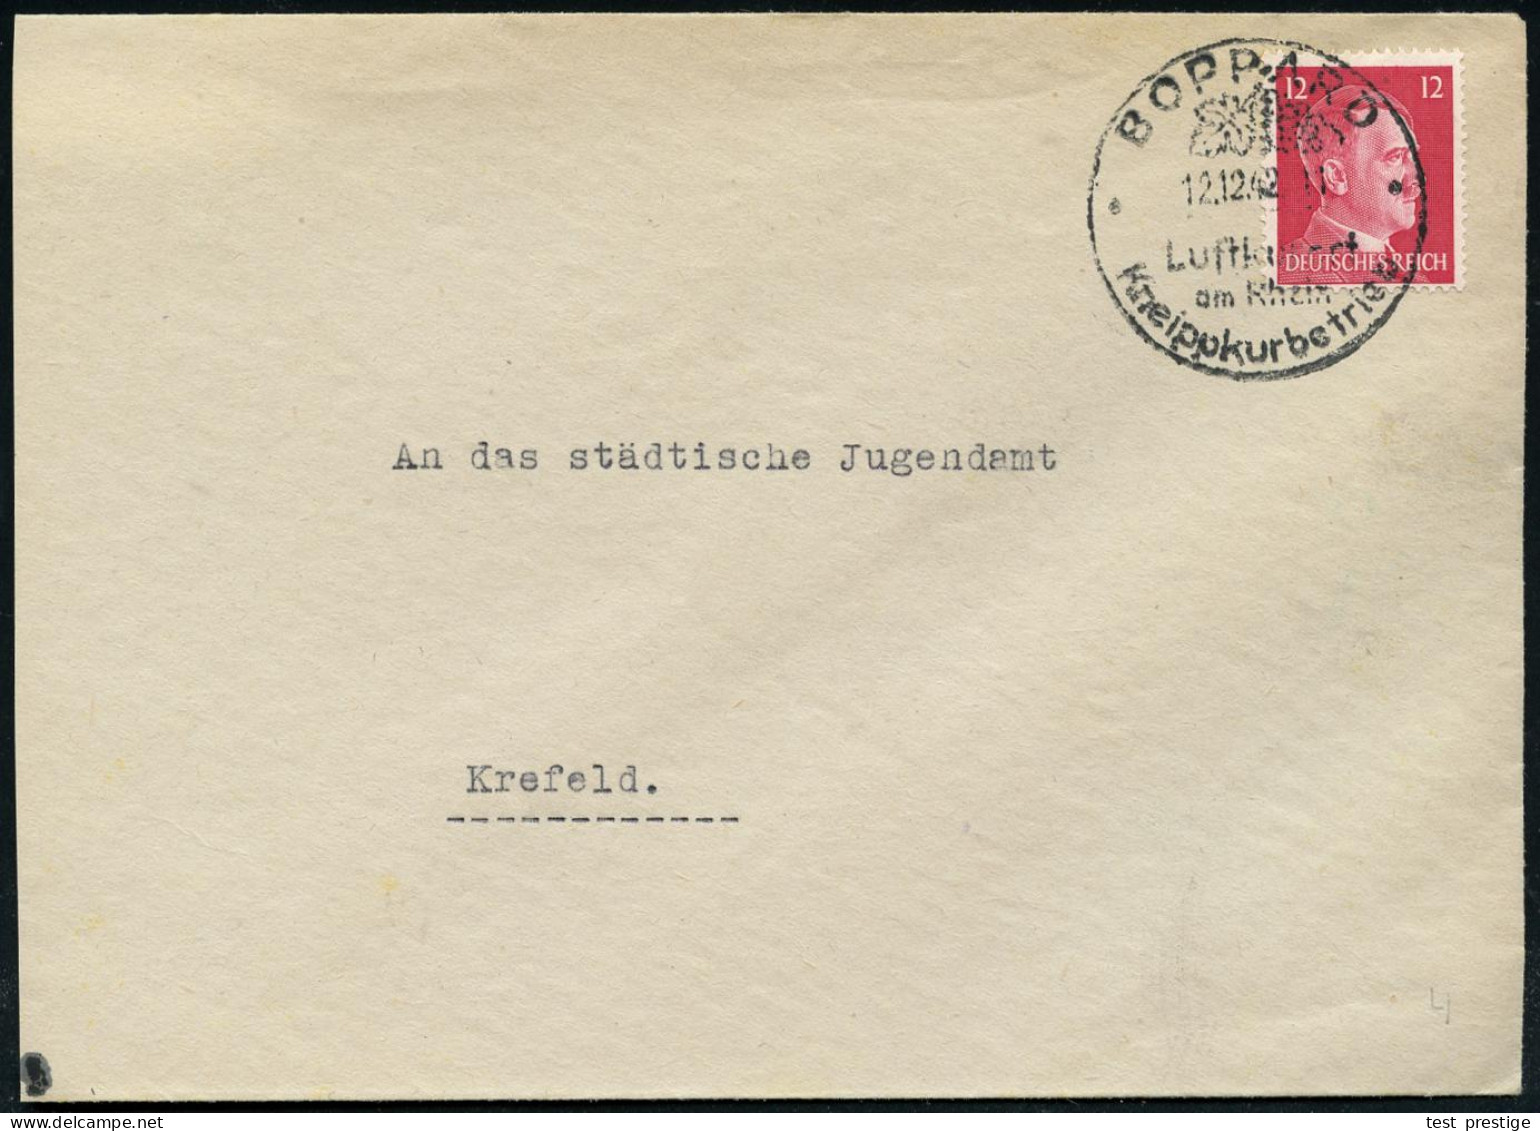 BOPPARD/ Luftkurort/ Am Rhein/ Kneippkurbetrieb 1942 (12.12.) Seltener HWSt (Weinblatt) Fernbf. (Bo.4) - SEBASTIAN KNEIP - Medicina